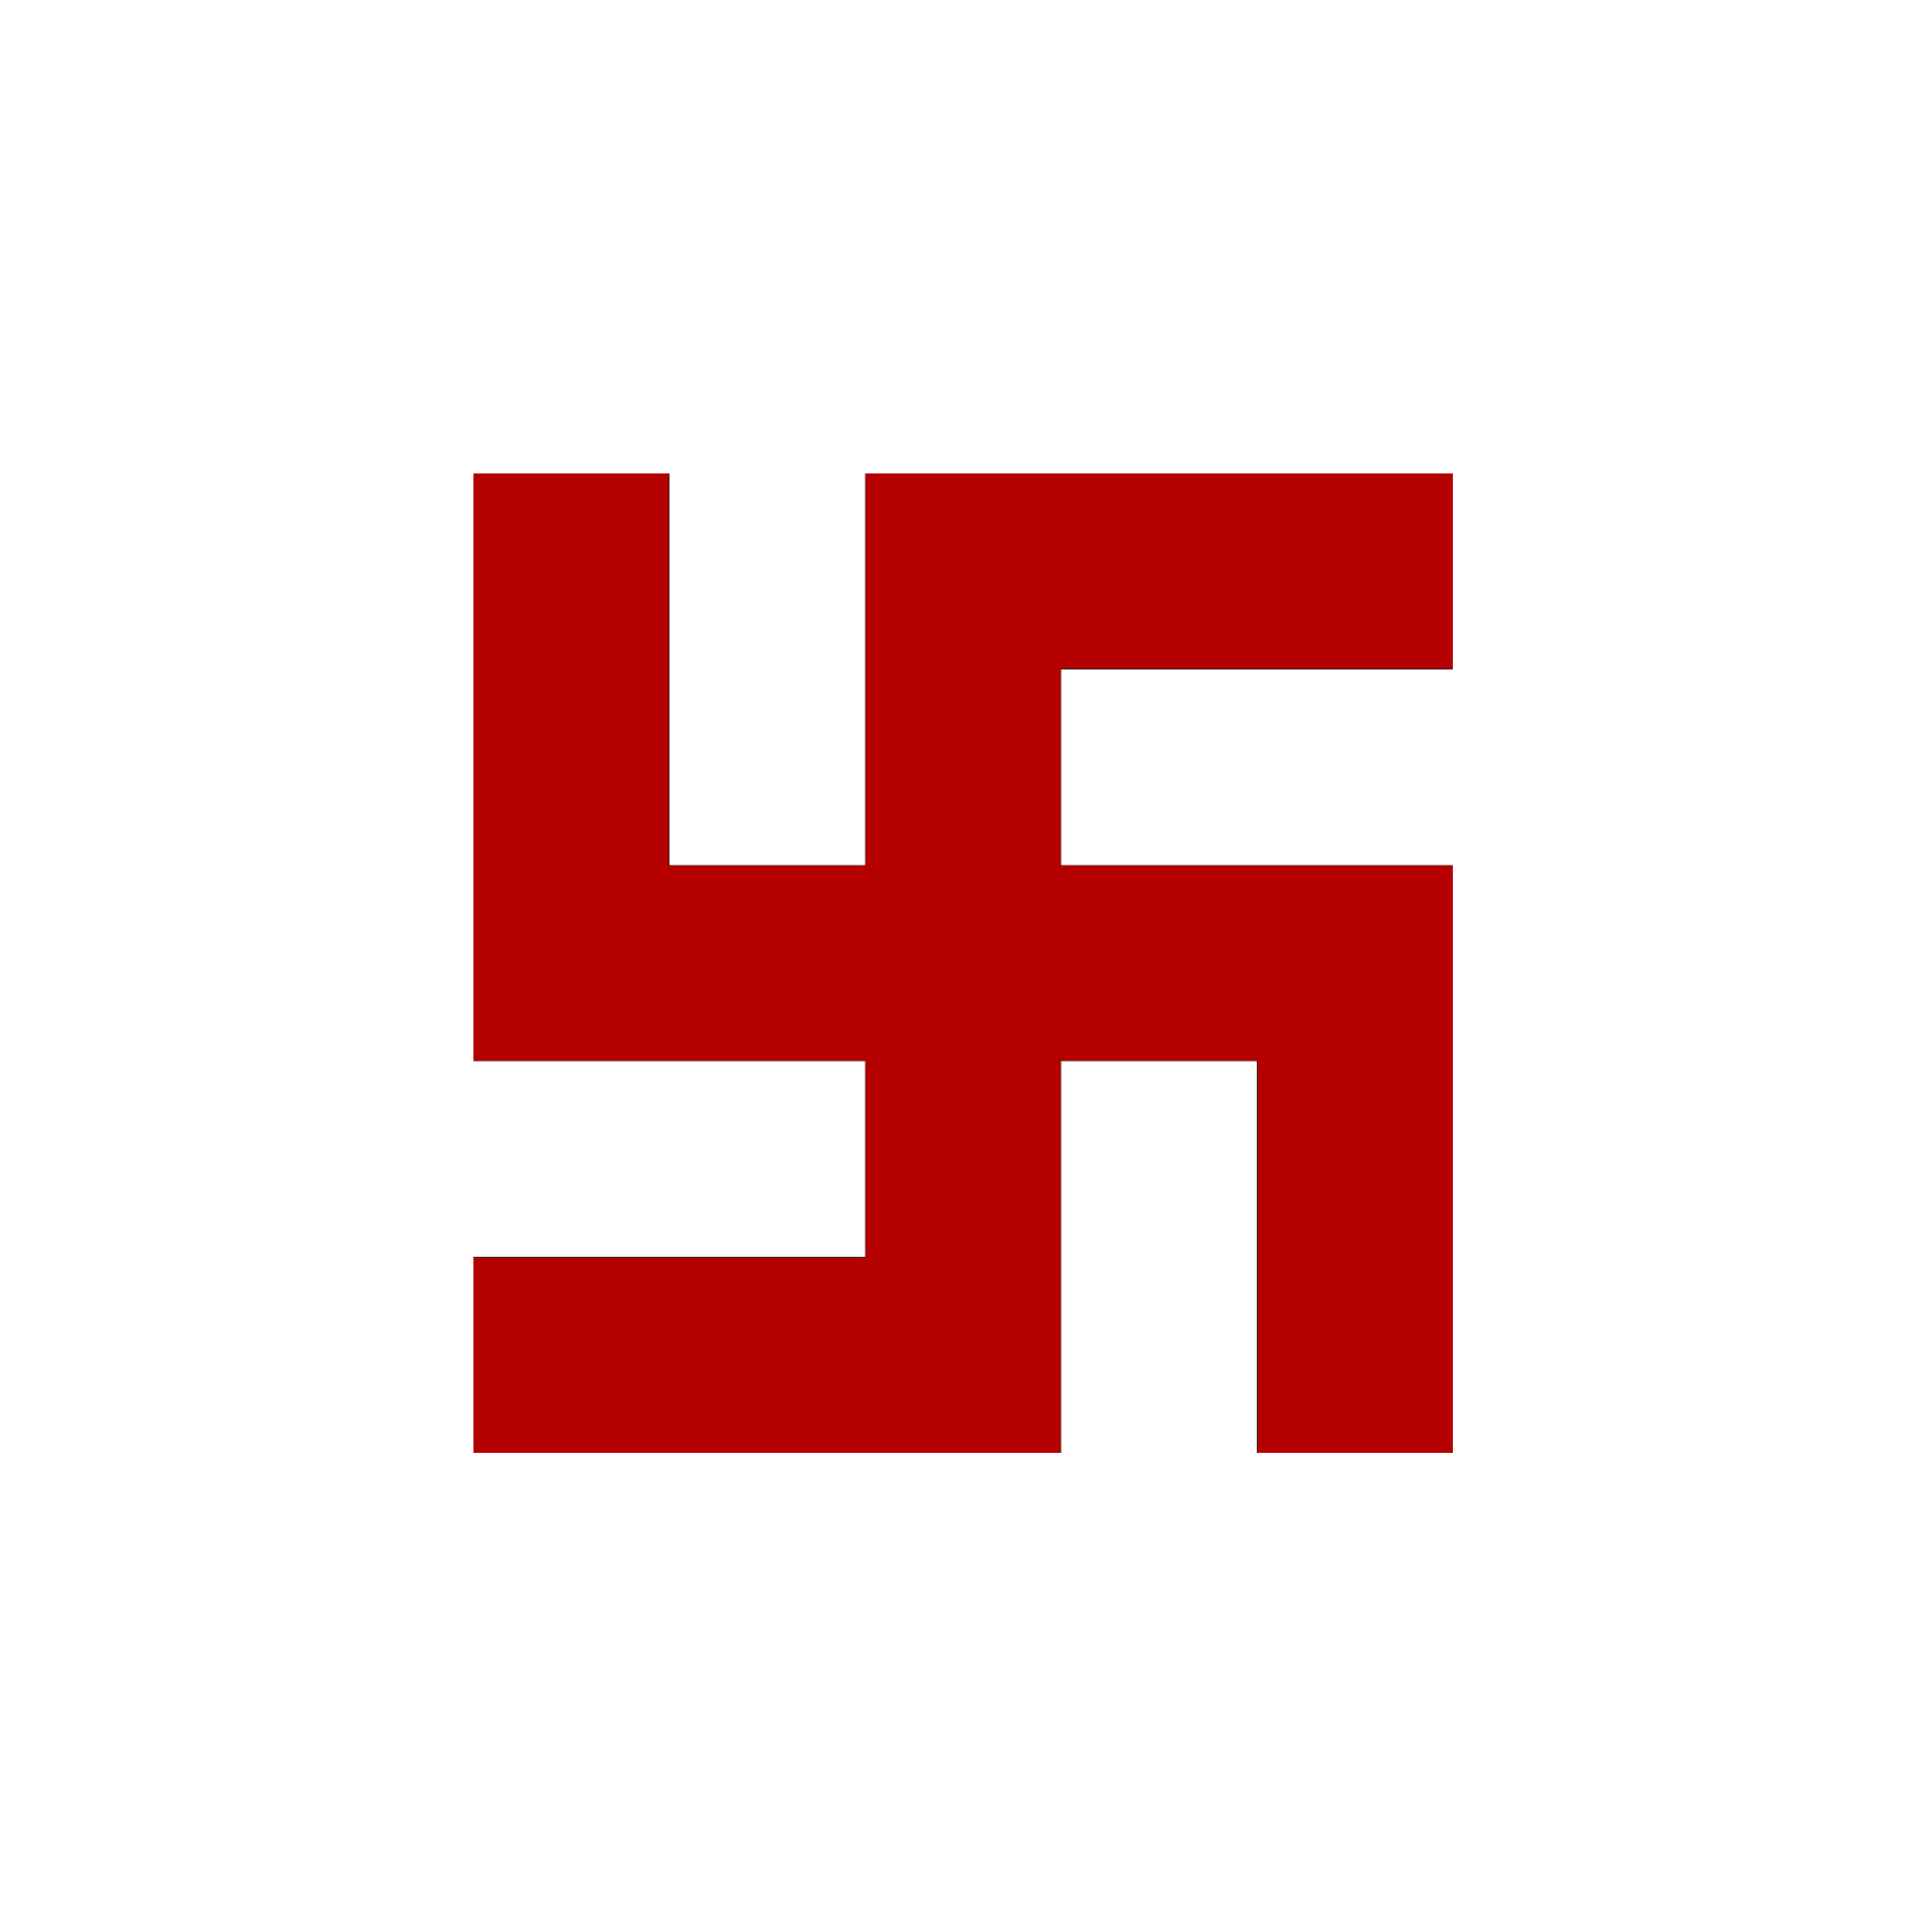 Swastika Mukherjee Ass Selfie Naked Pics